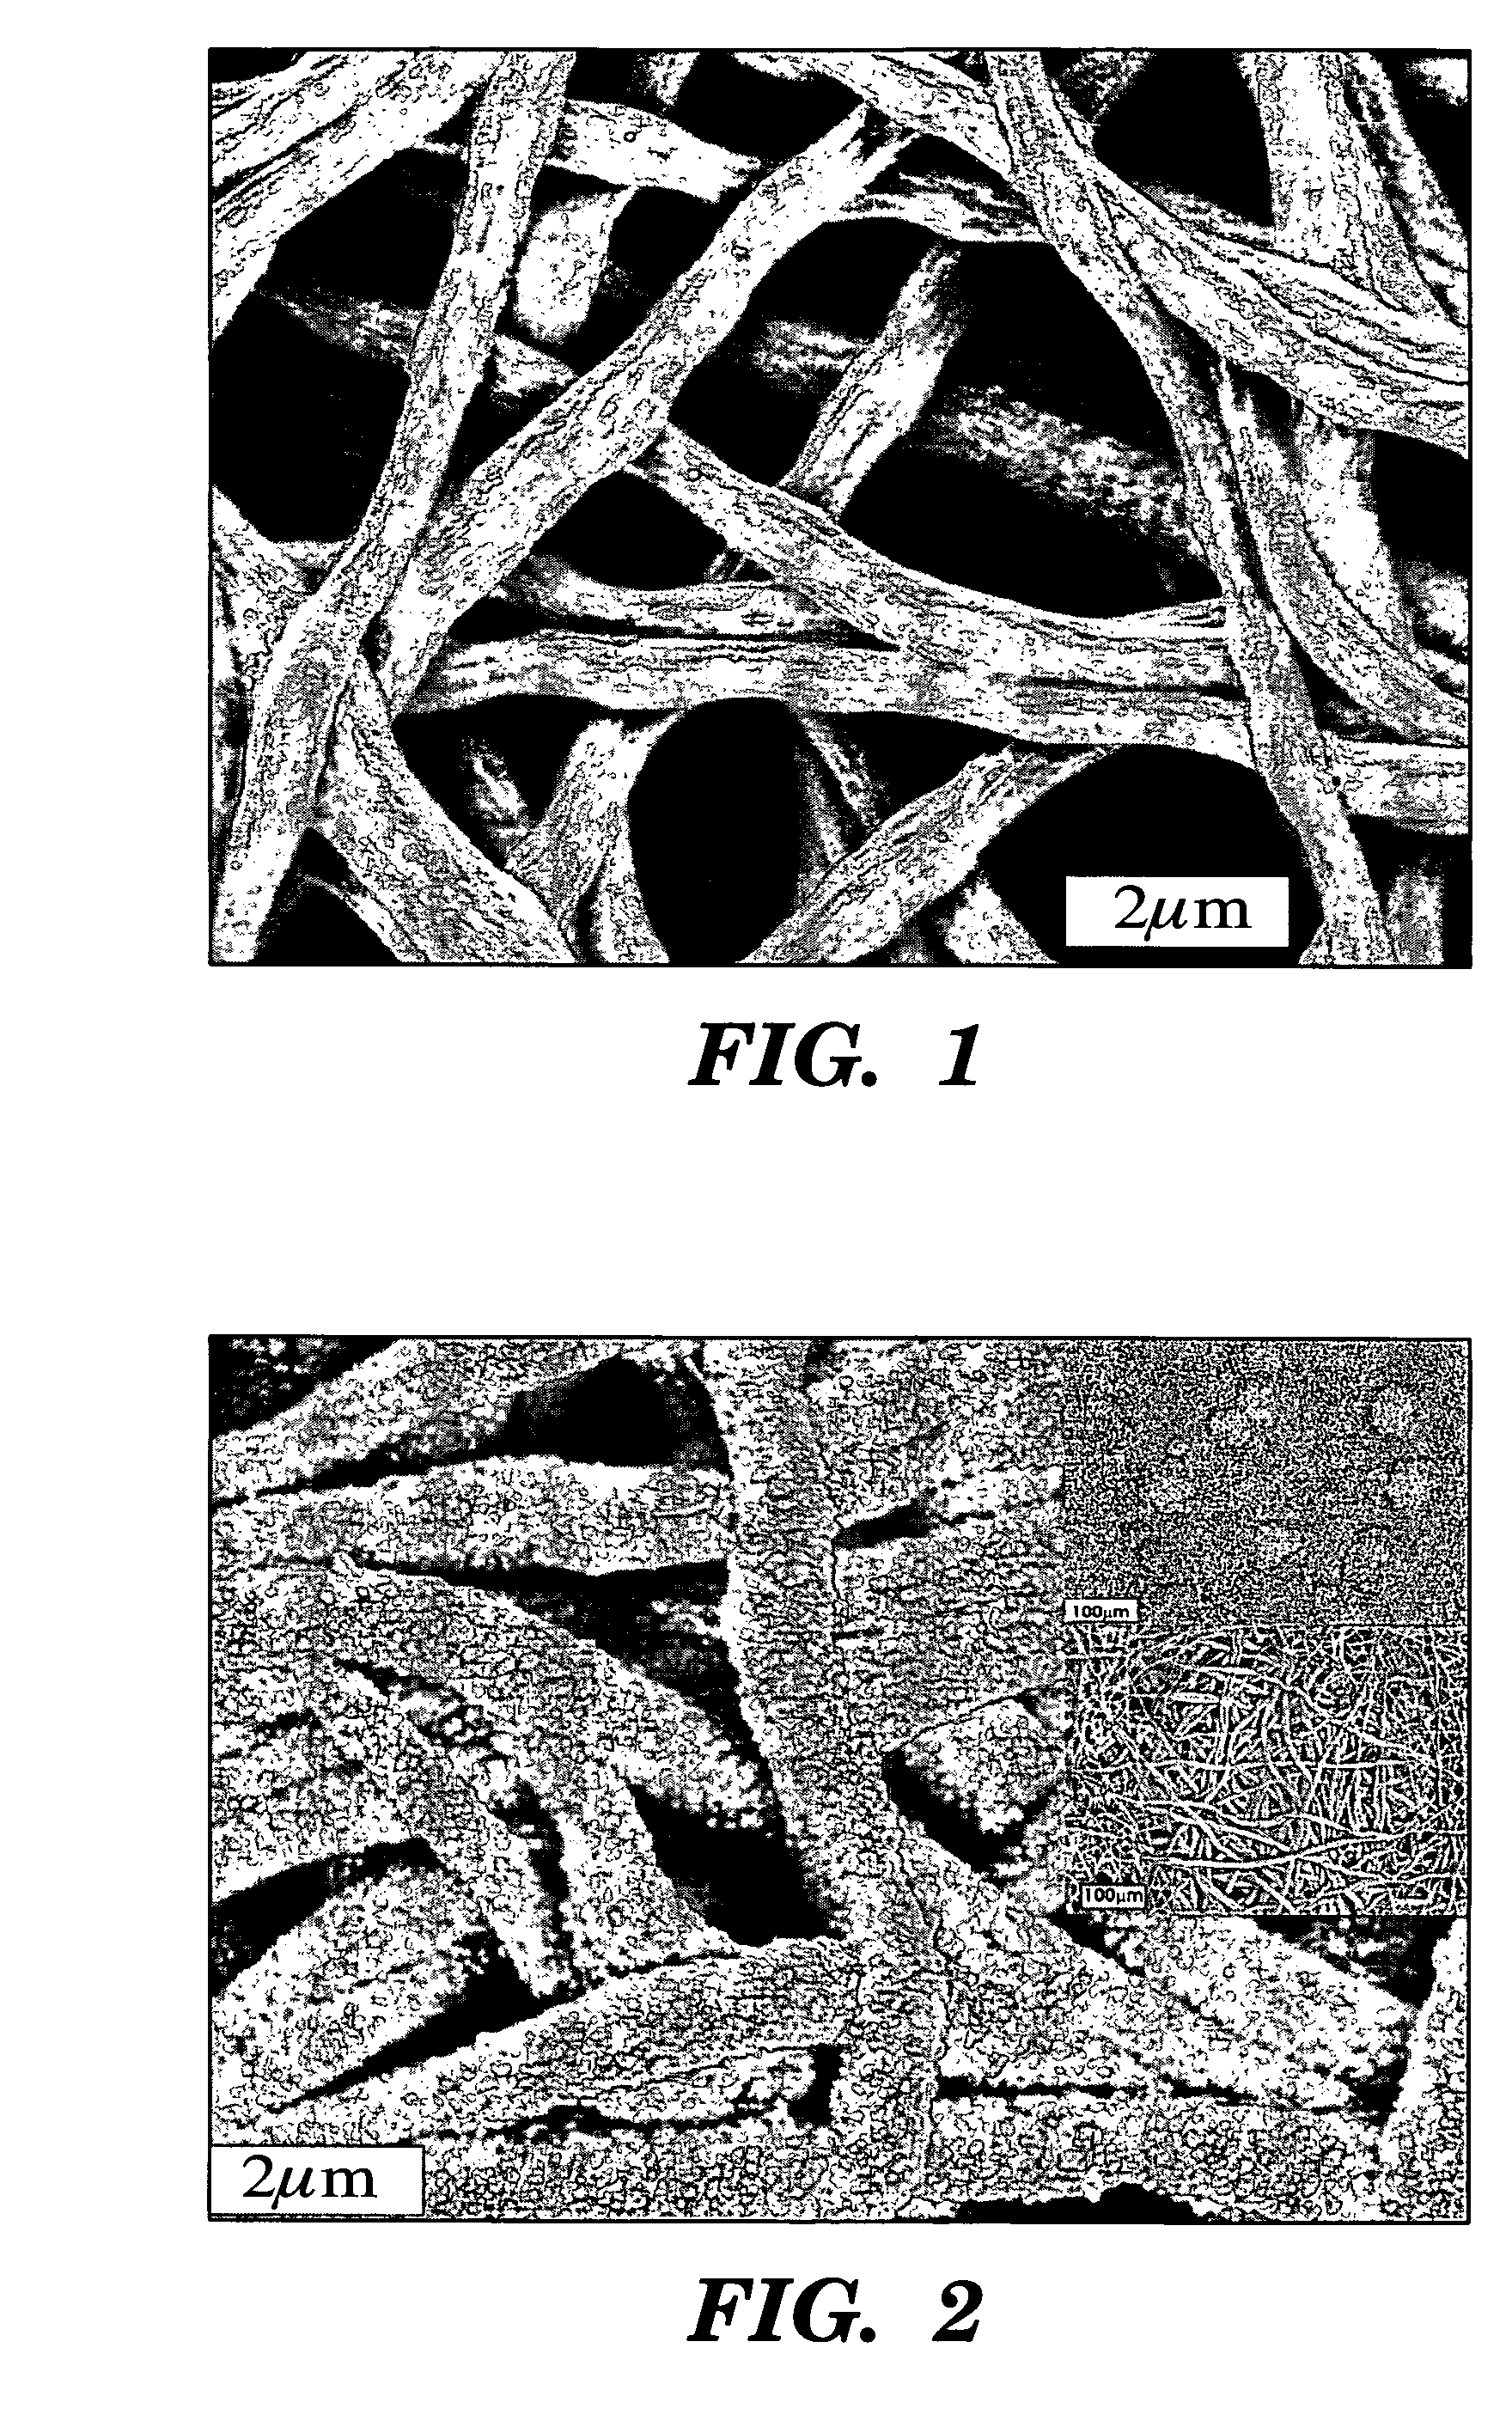 Method for forming inorganic coatings